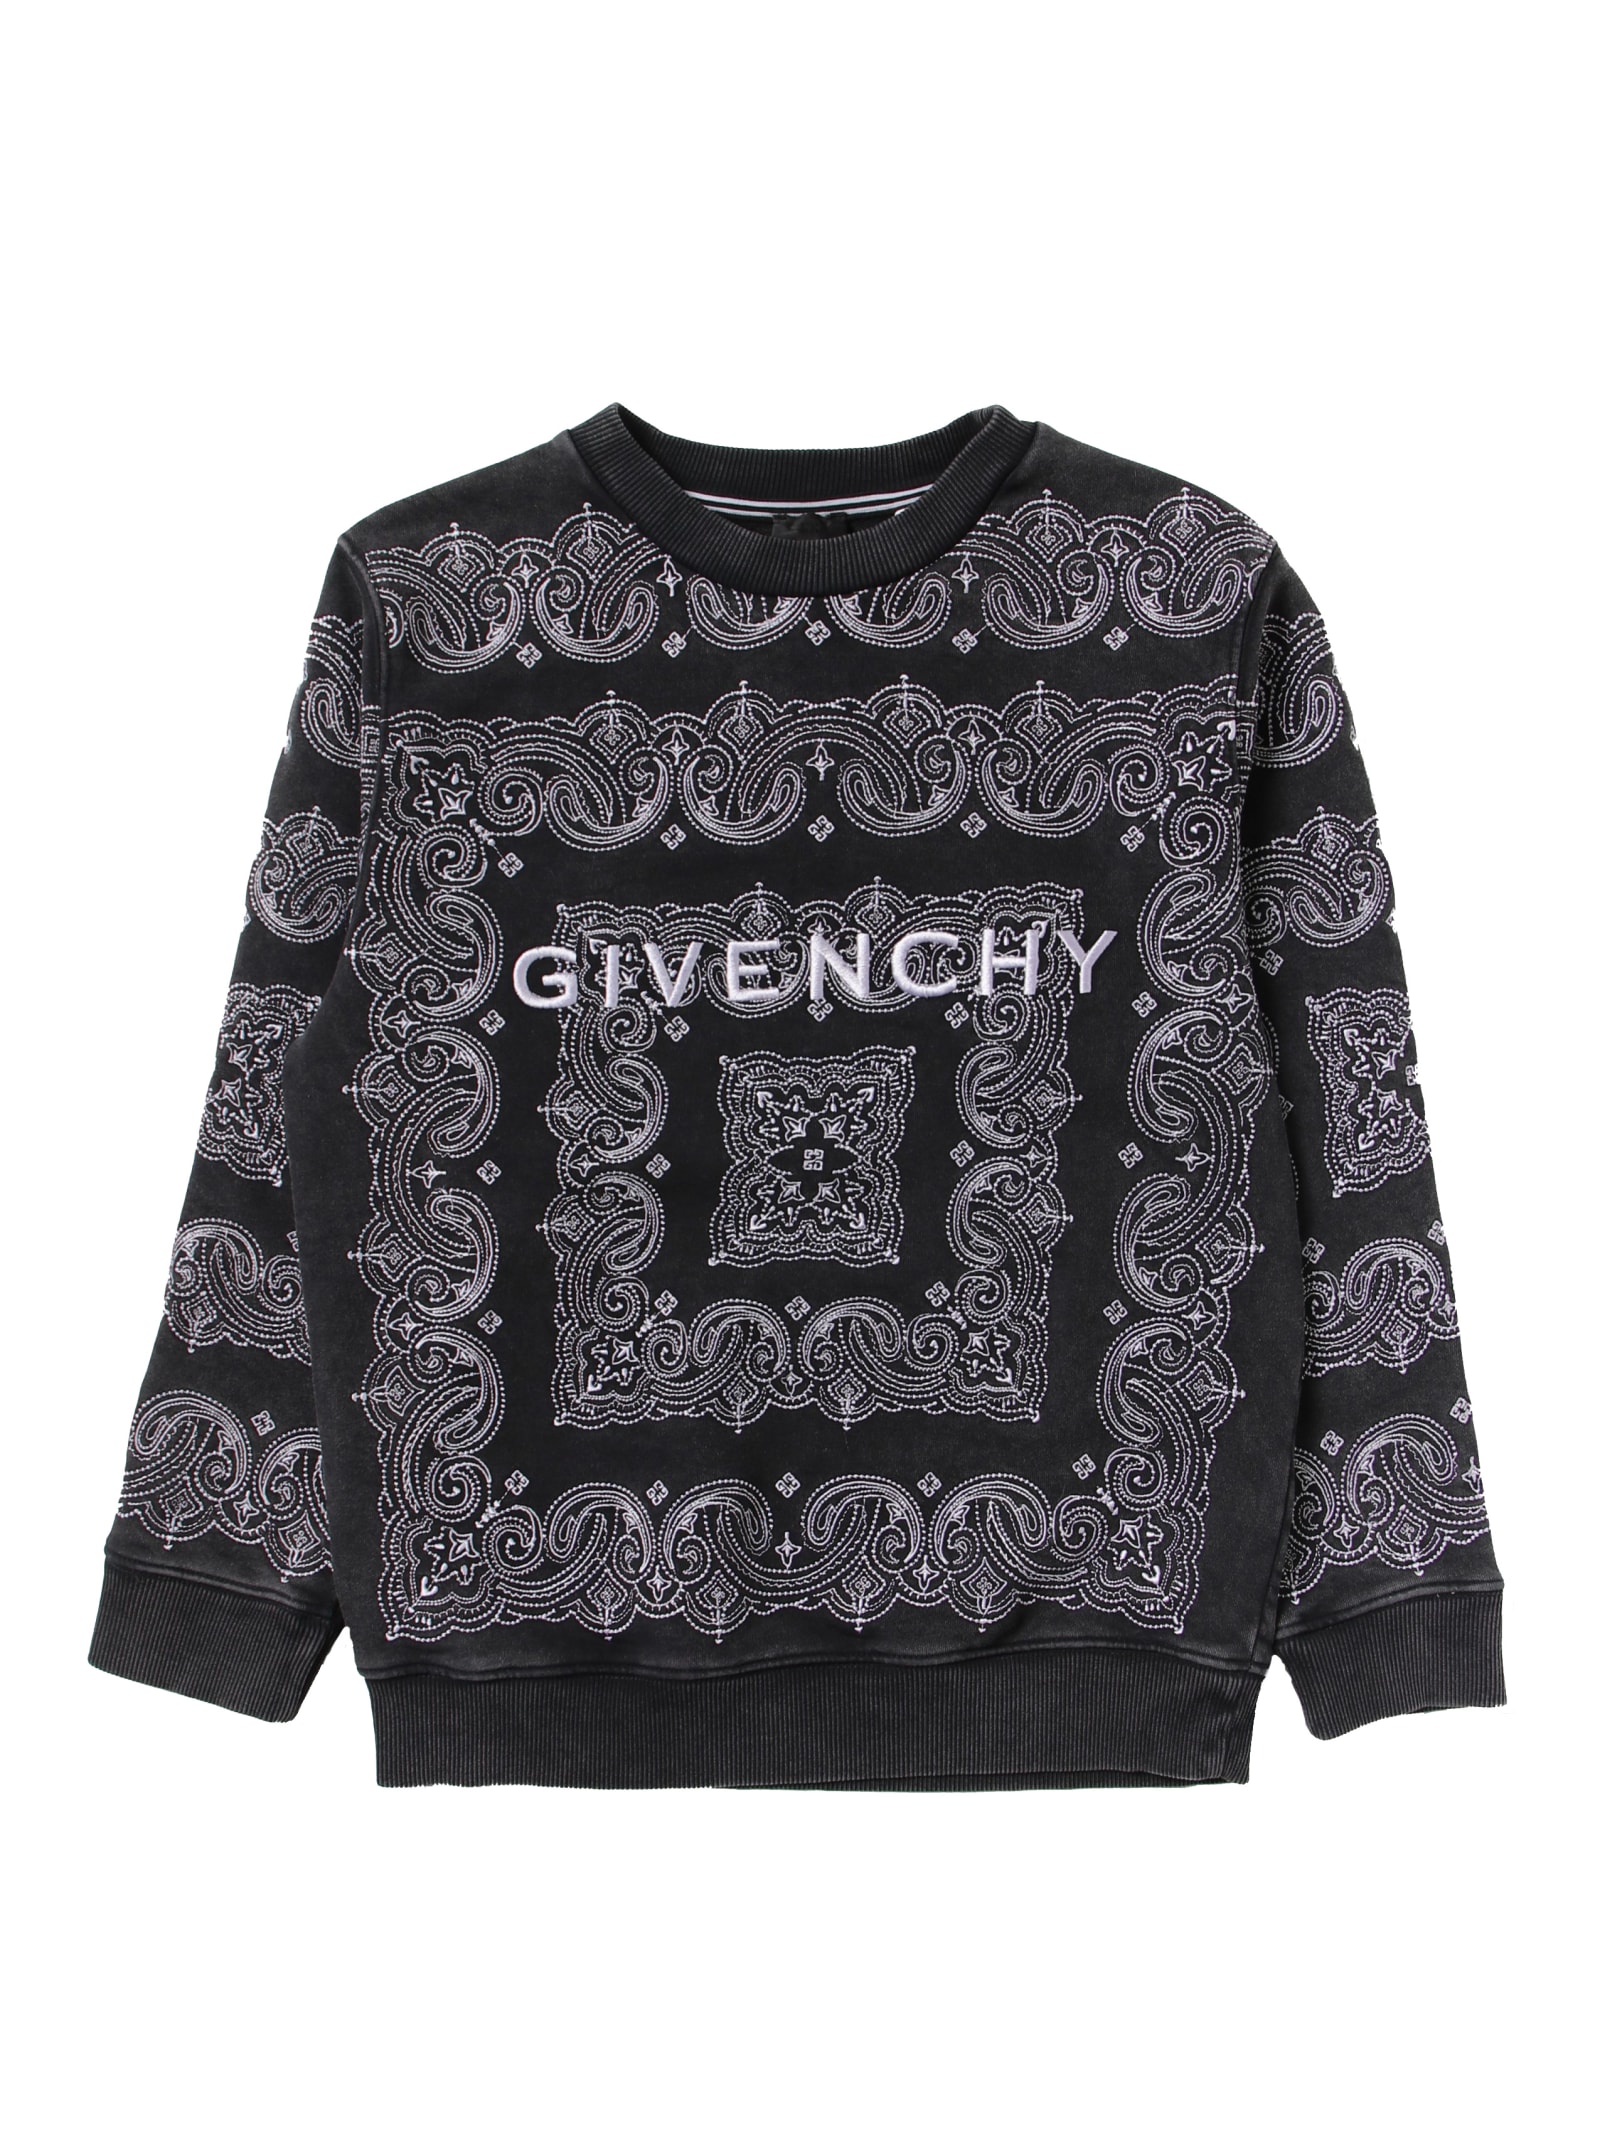 Givenchy Sweatshirt With Bandana Print